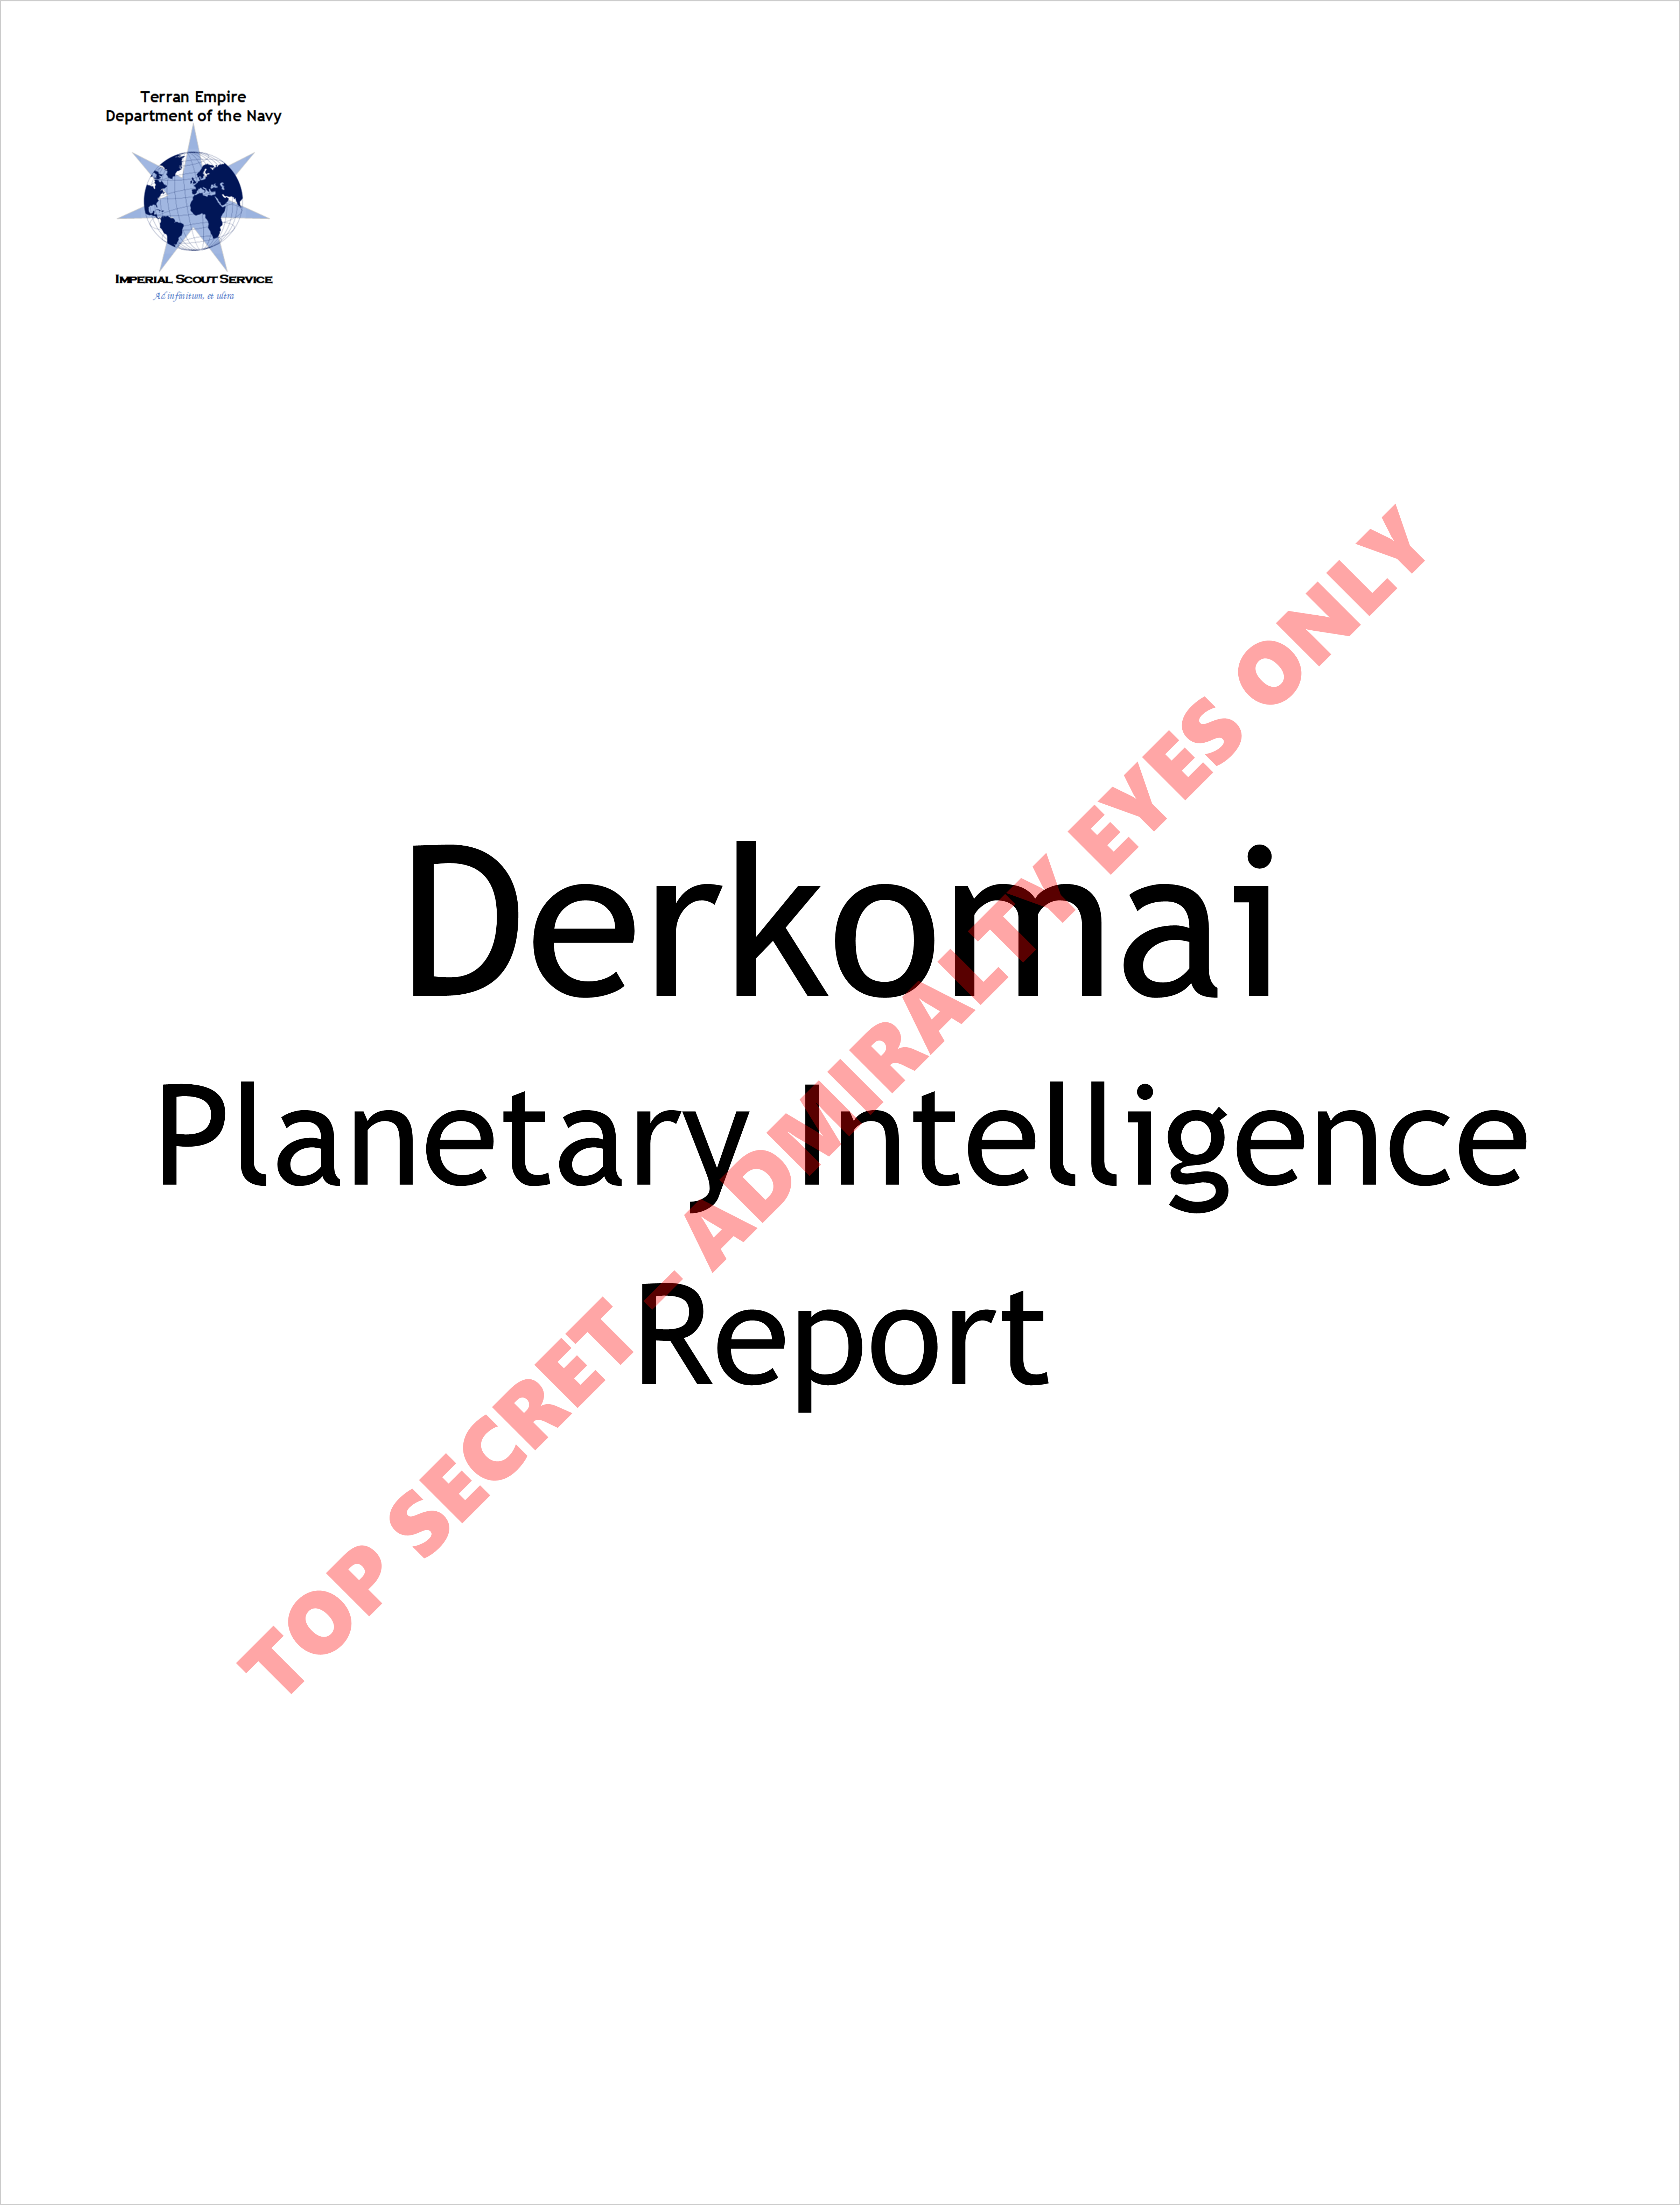 Derkomai Planetary Intelligence Report